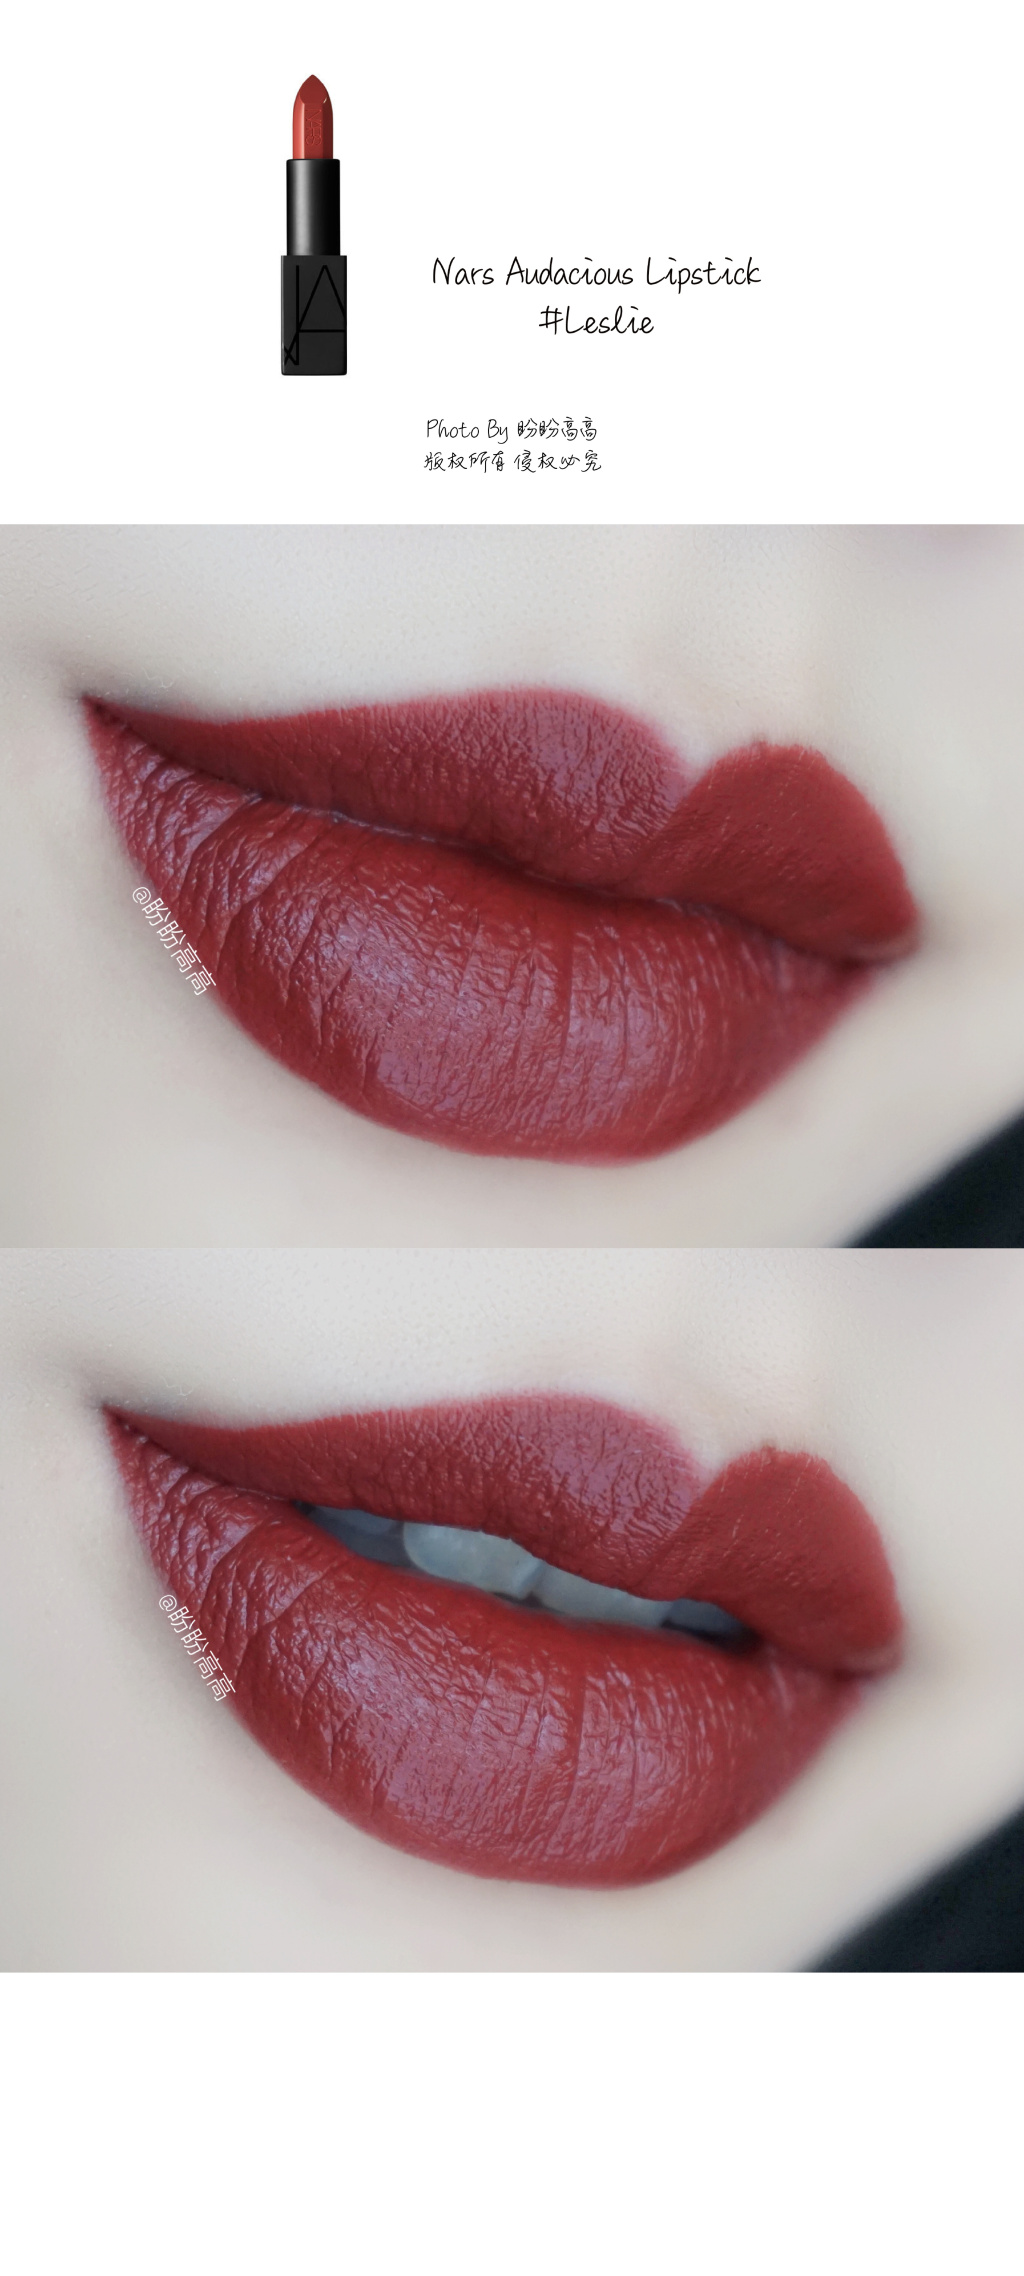 Burberry Kisses Lip Colour - 93、Nars Audacious Lipstick - Leslie试色